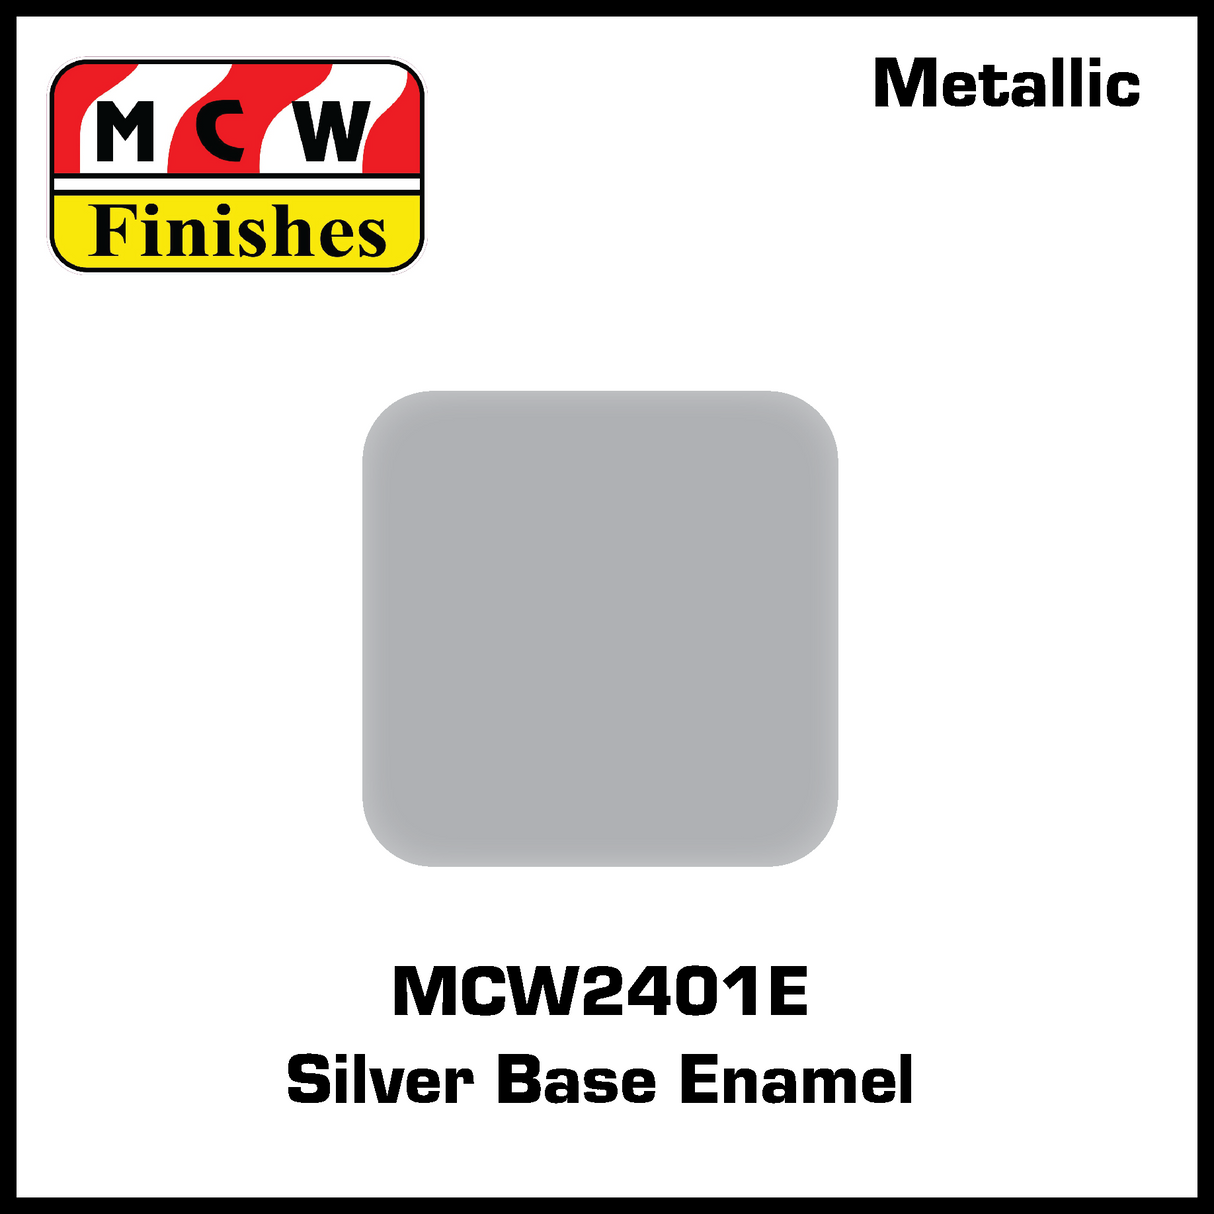 MCW Finishes 2401E Silver Base Enamel